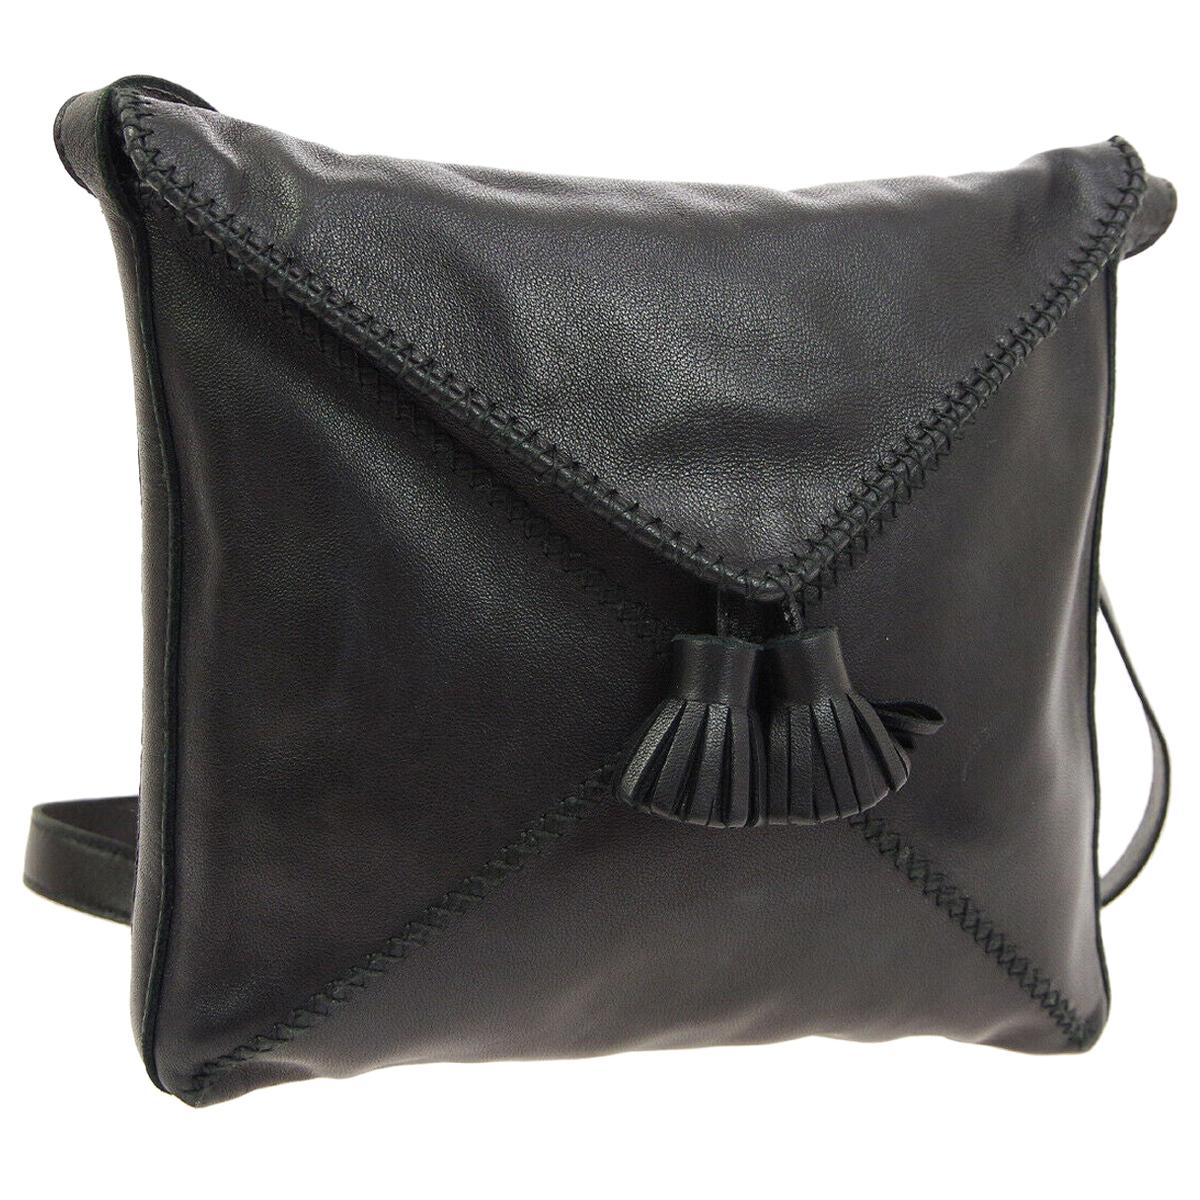 Hermes Black Leather Tassel Small Mini Carryall Shoulder Bag